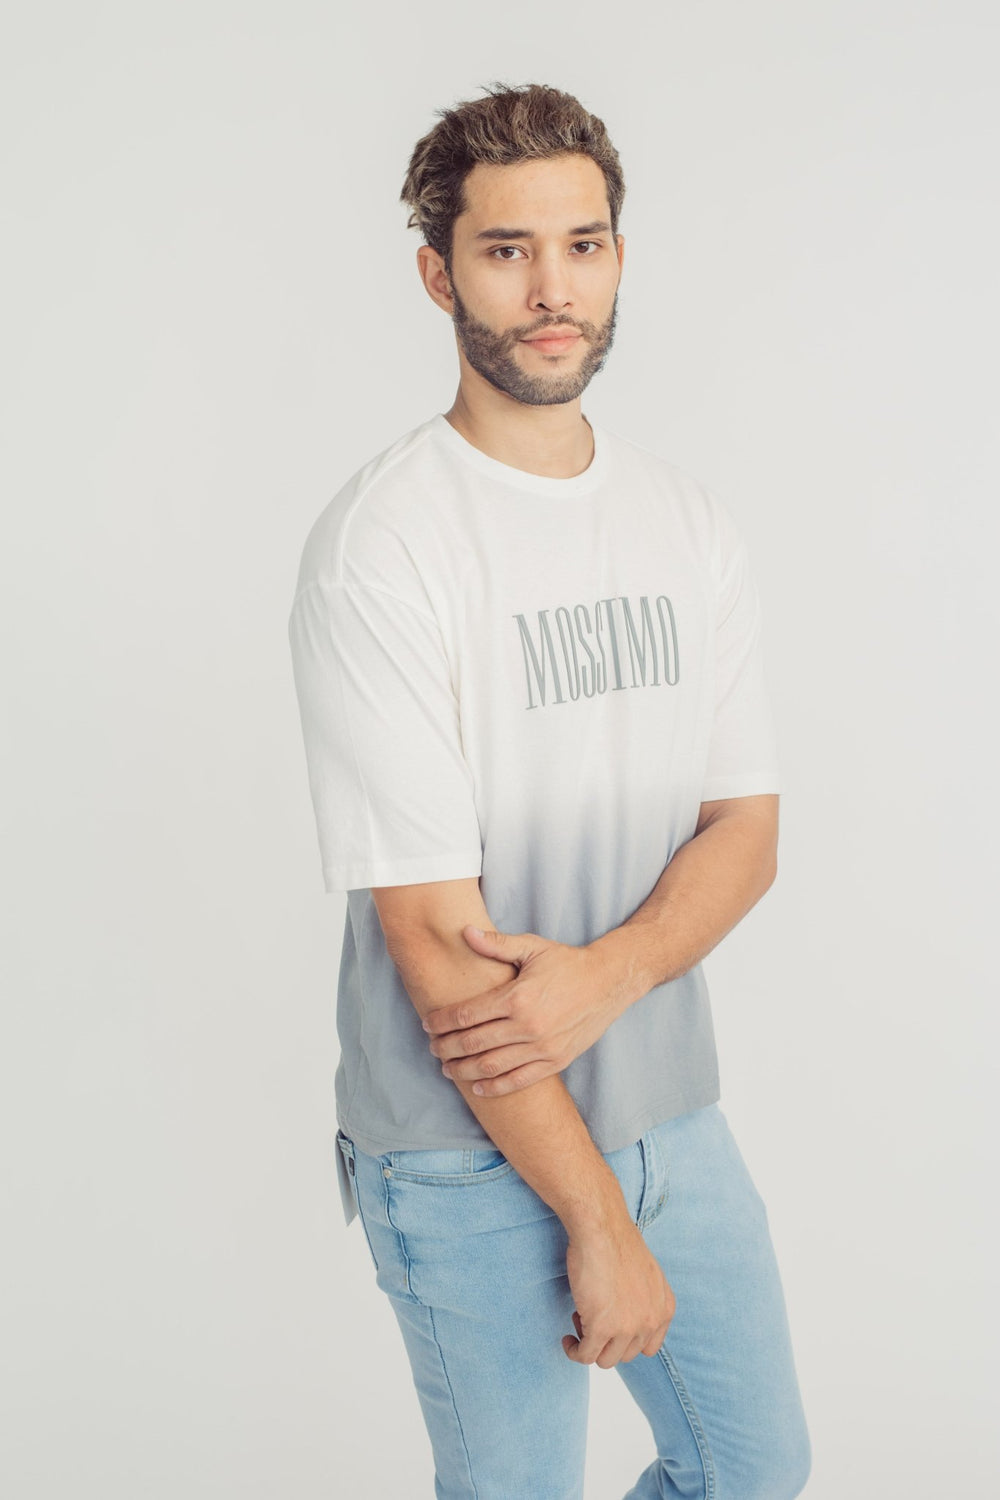 Ivan Gray Fashion Round Neck Shirt with High Density Print - Mossimo PH